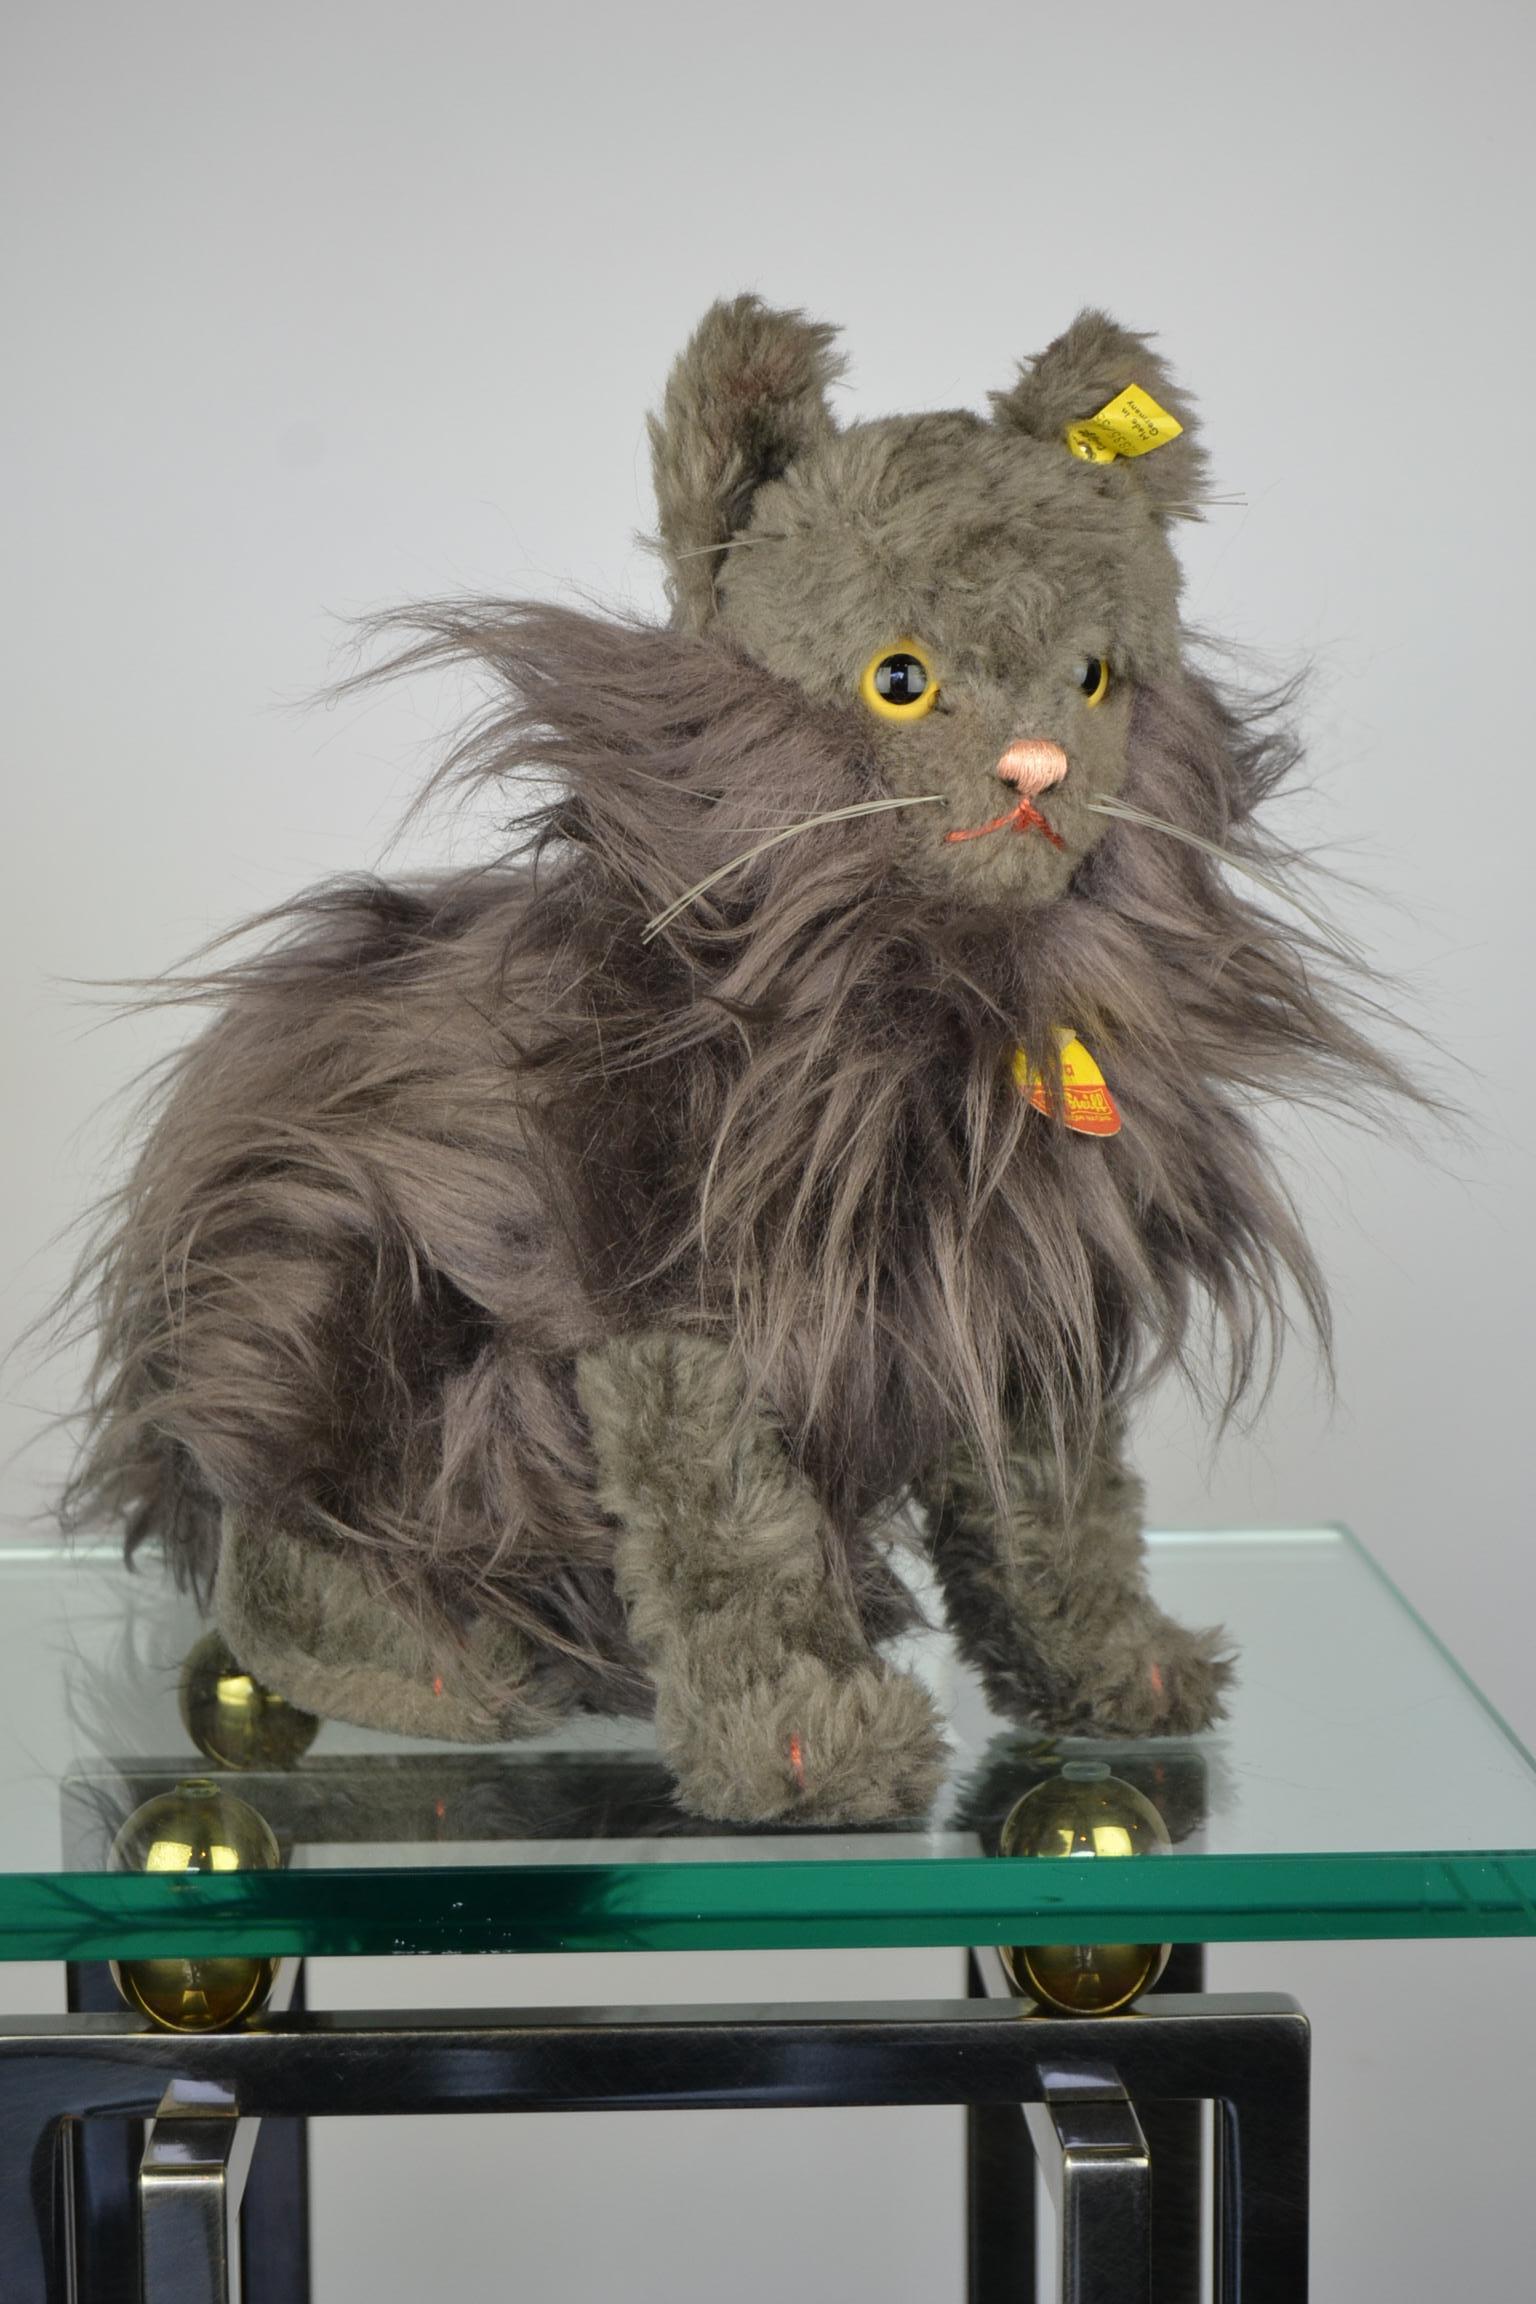 European Lifesize Persian Cat Toy, Diva, by Steiff, Germany, 1968-1978